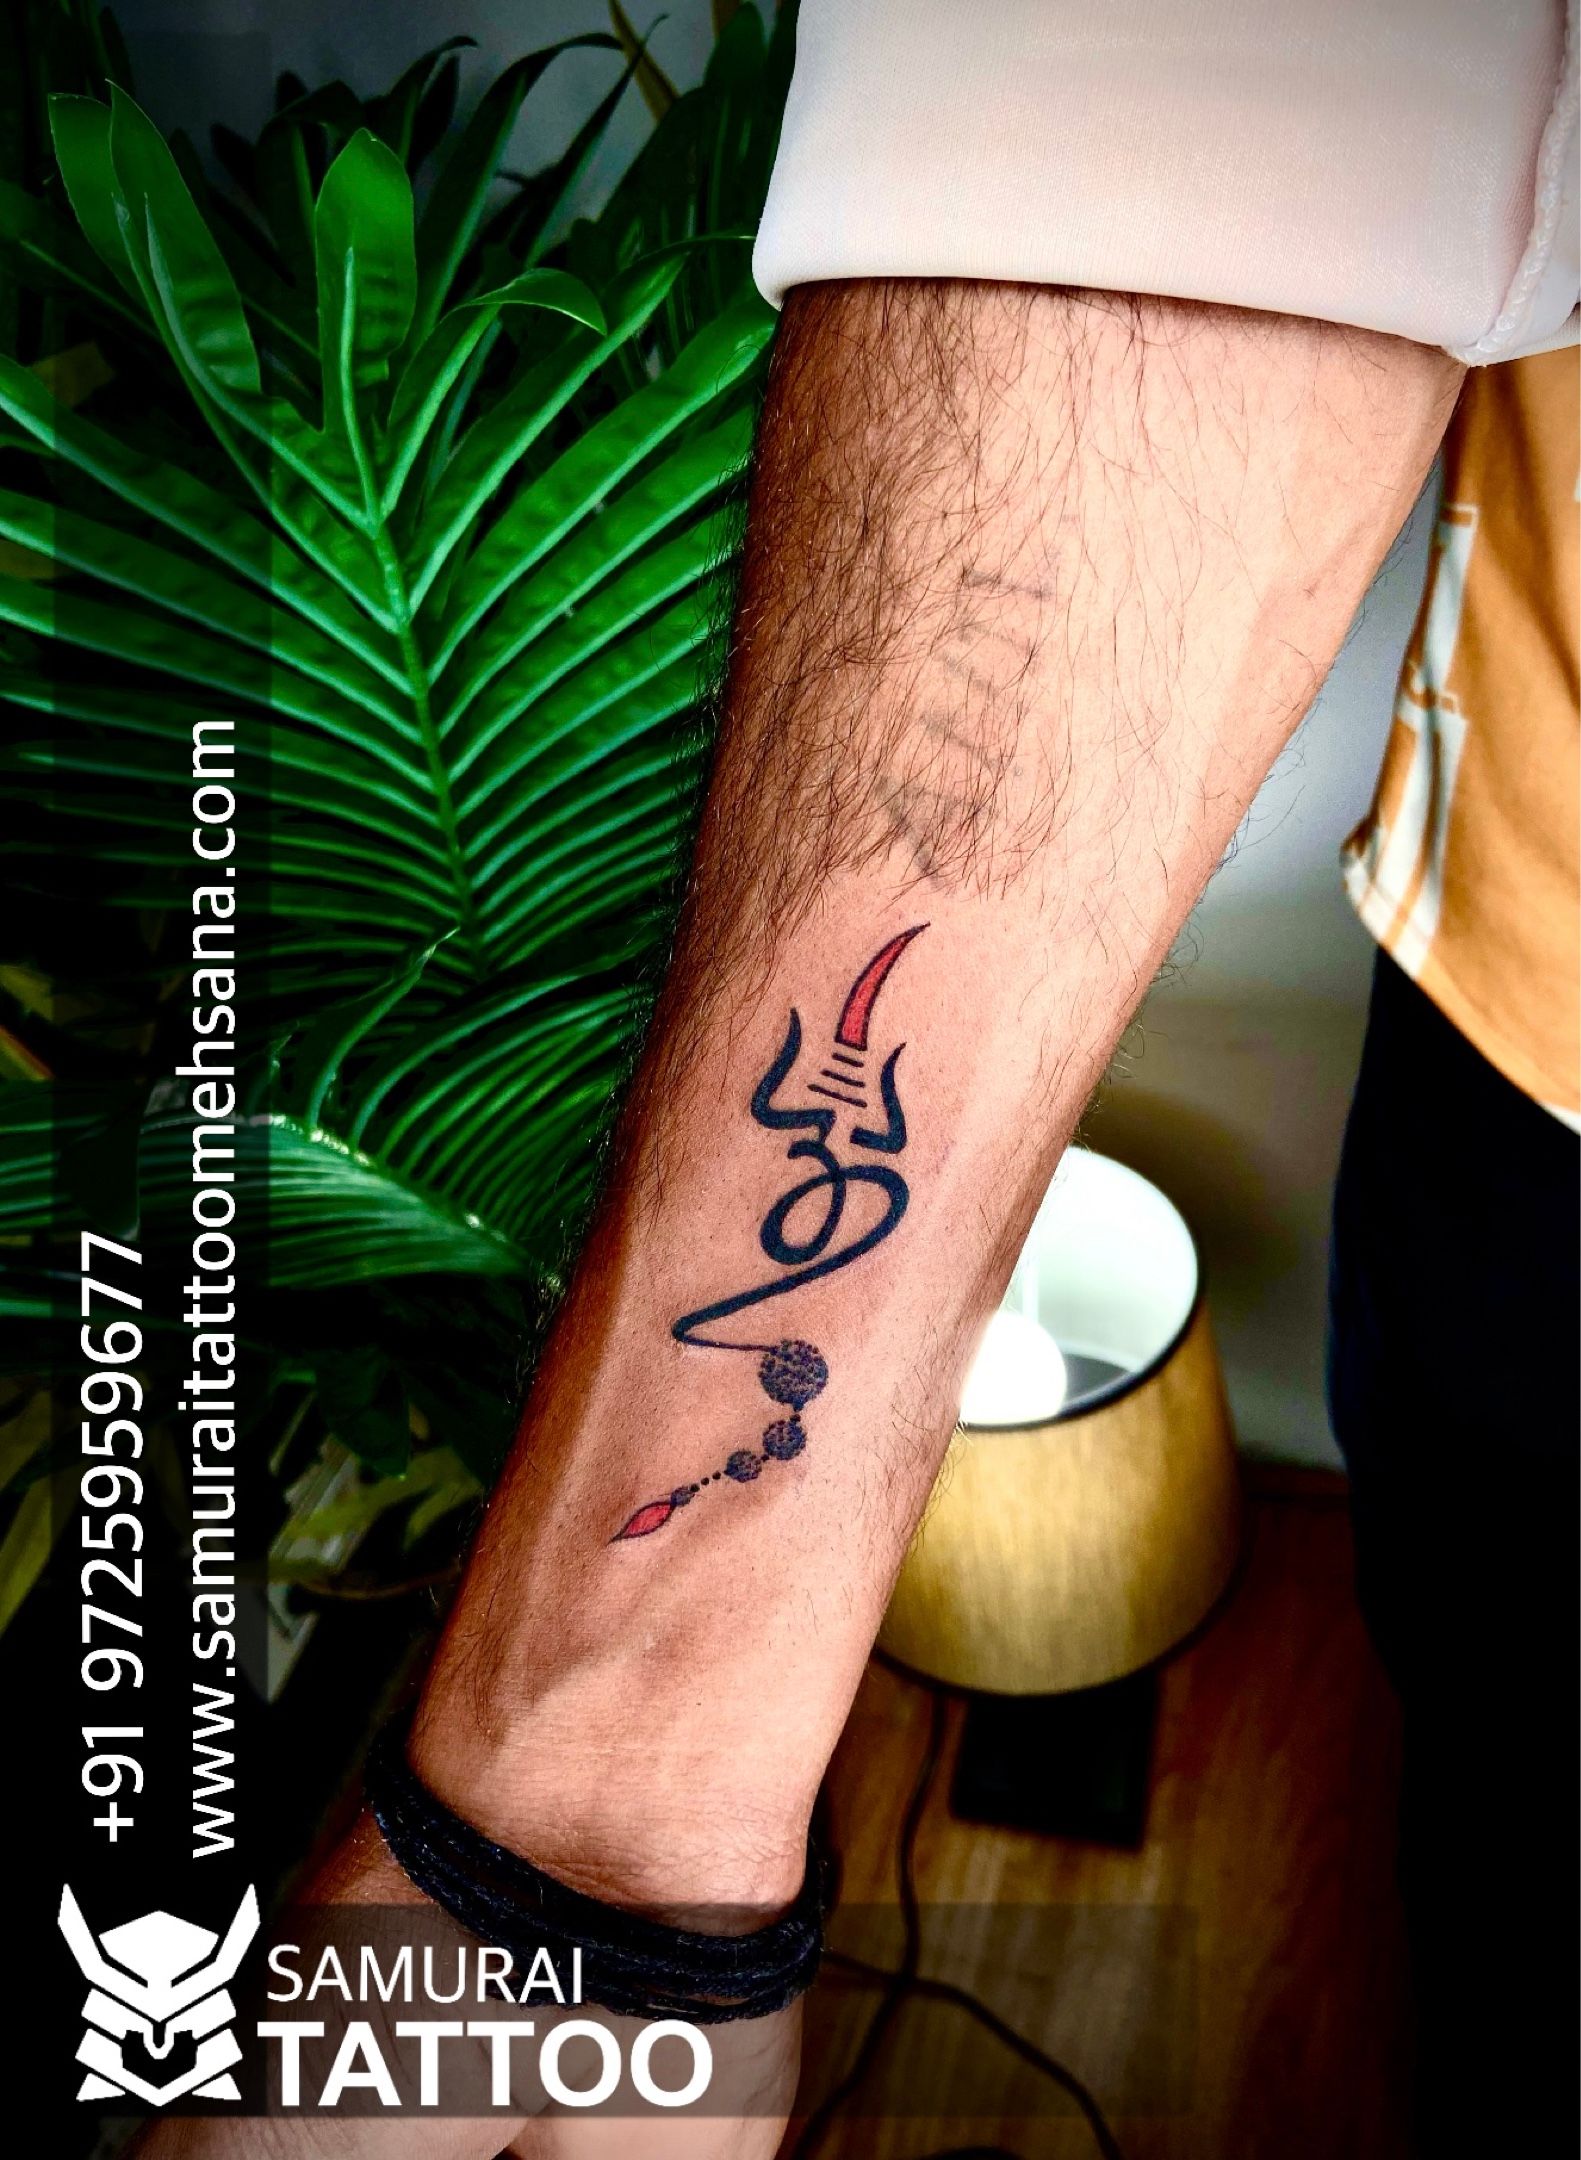 Share more than 141 mahadev tattoo pic latest